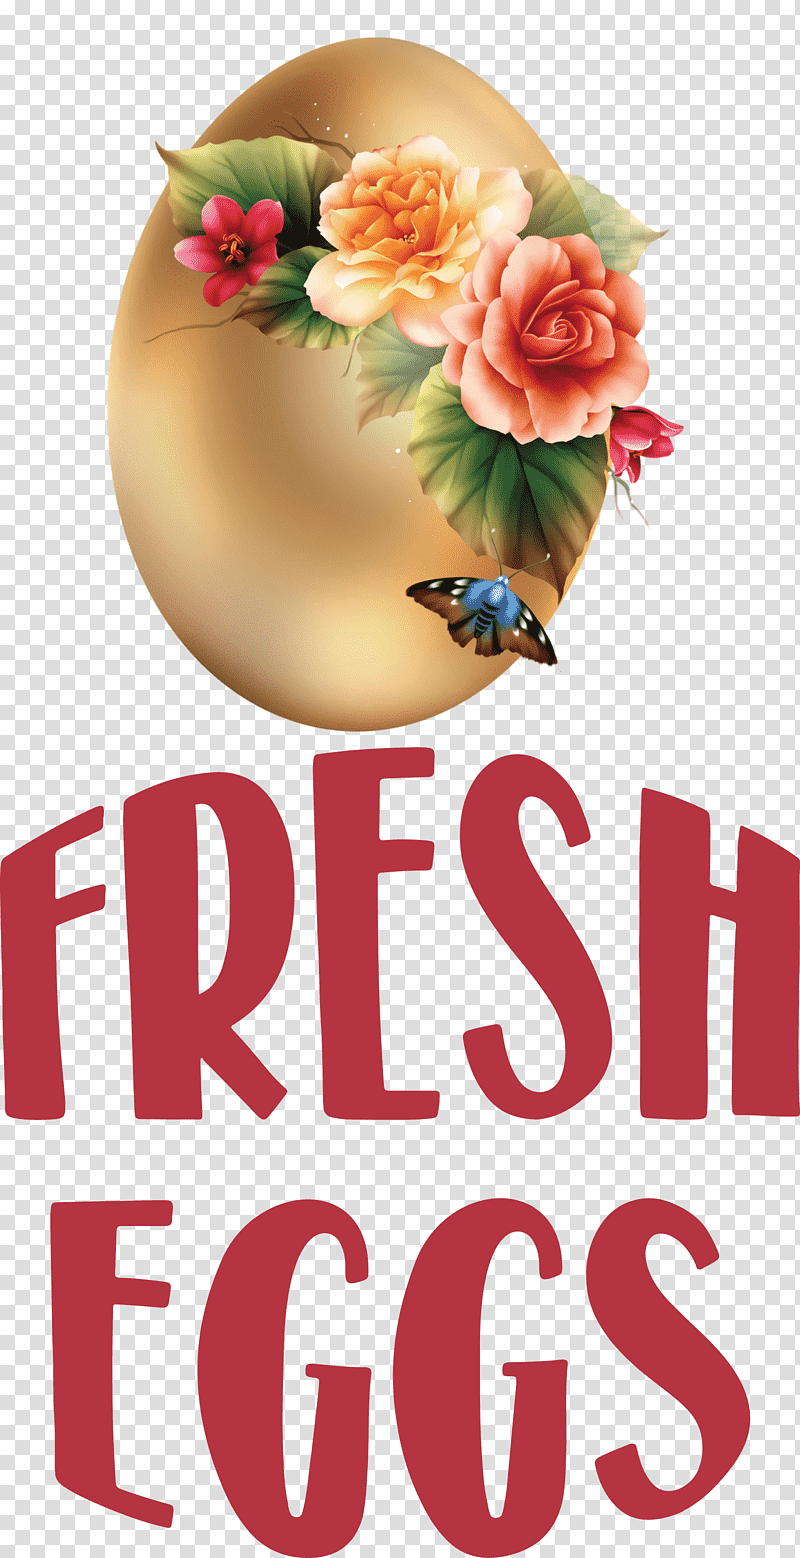 Fresh Eggs, Floral Design, Poster, Rose Family, Petal, Meter transparent background PNG clipart